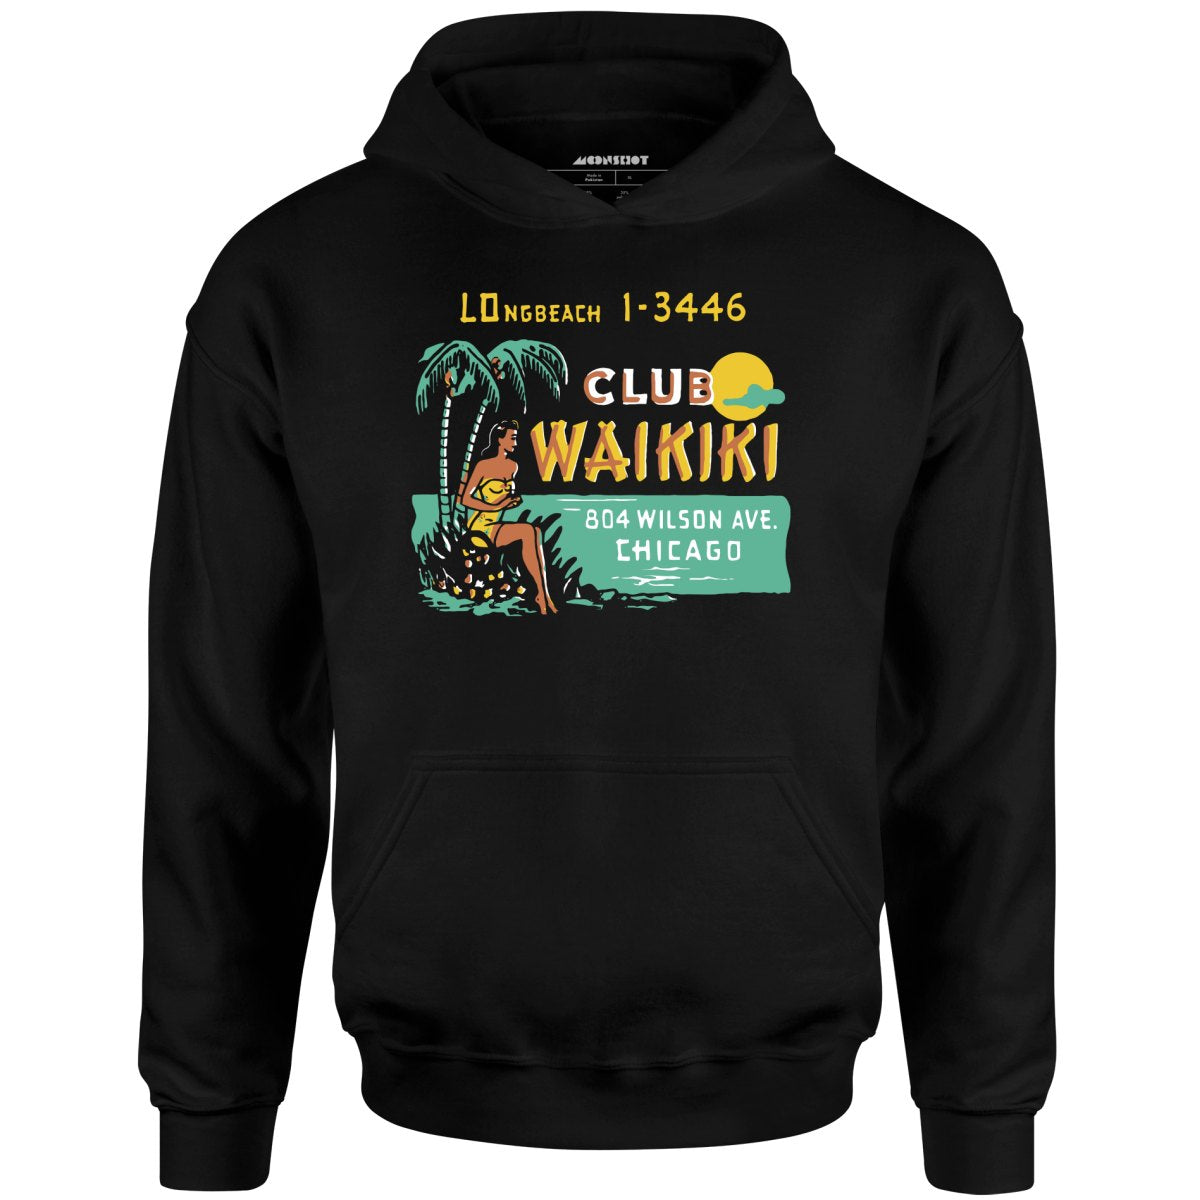 Club Waikiki v2 - Chicago, IL - Vintage Tiki Bar - Unisex Hoodie